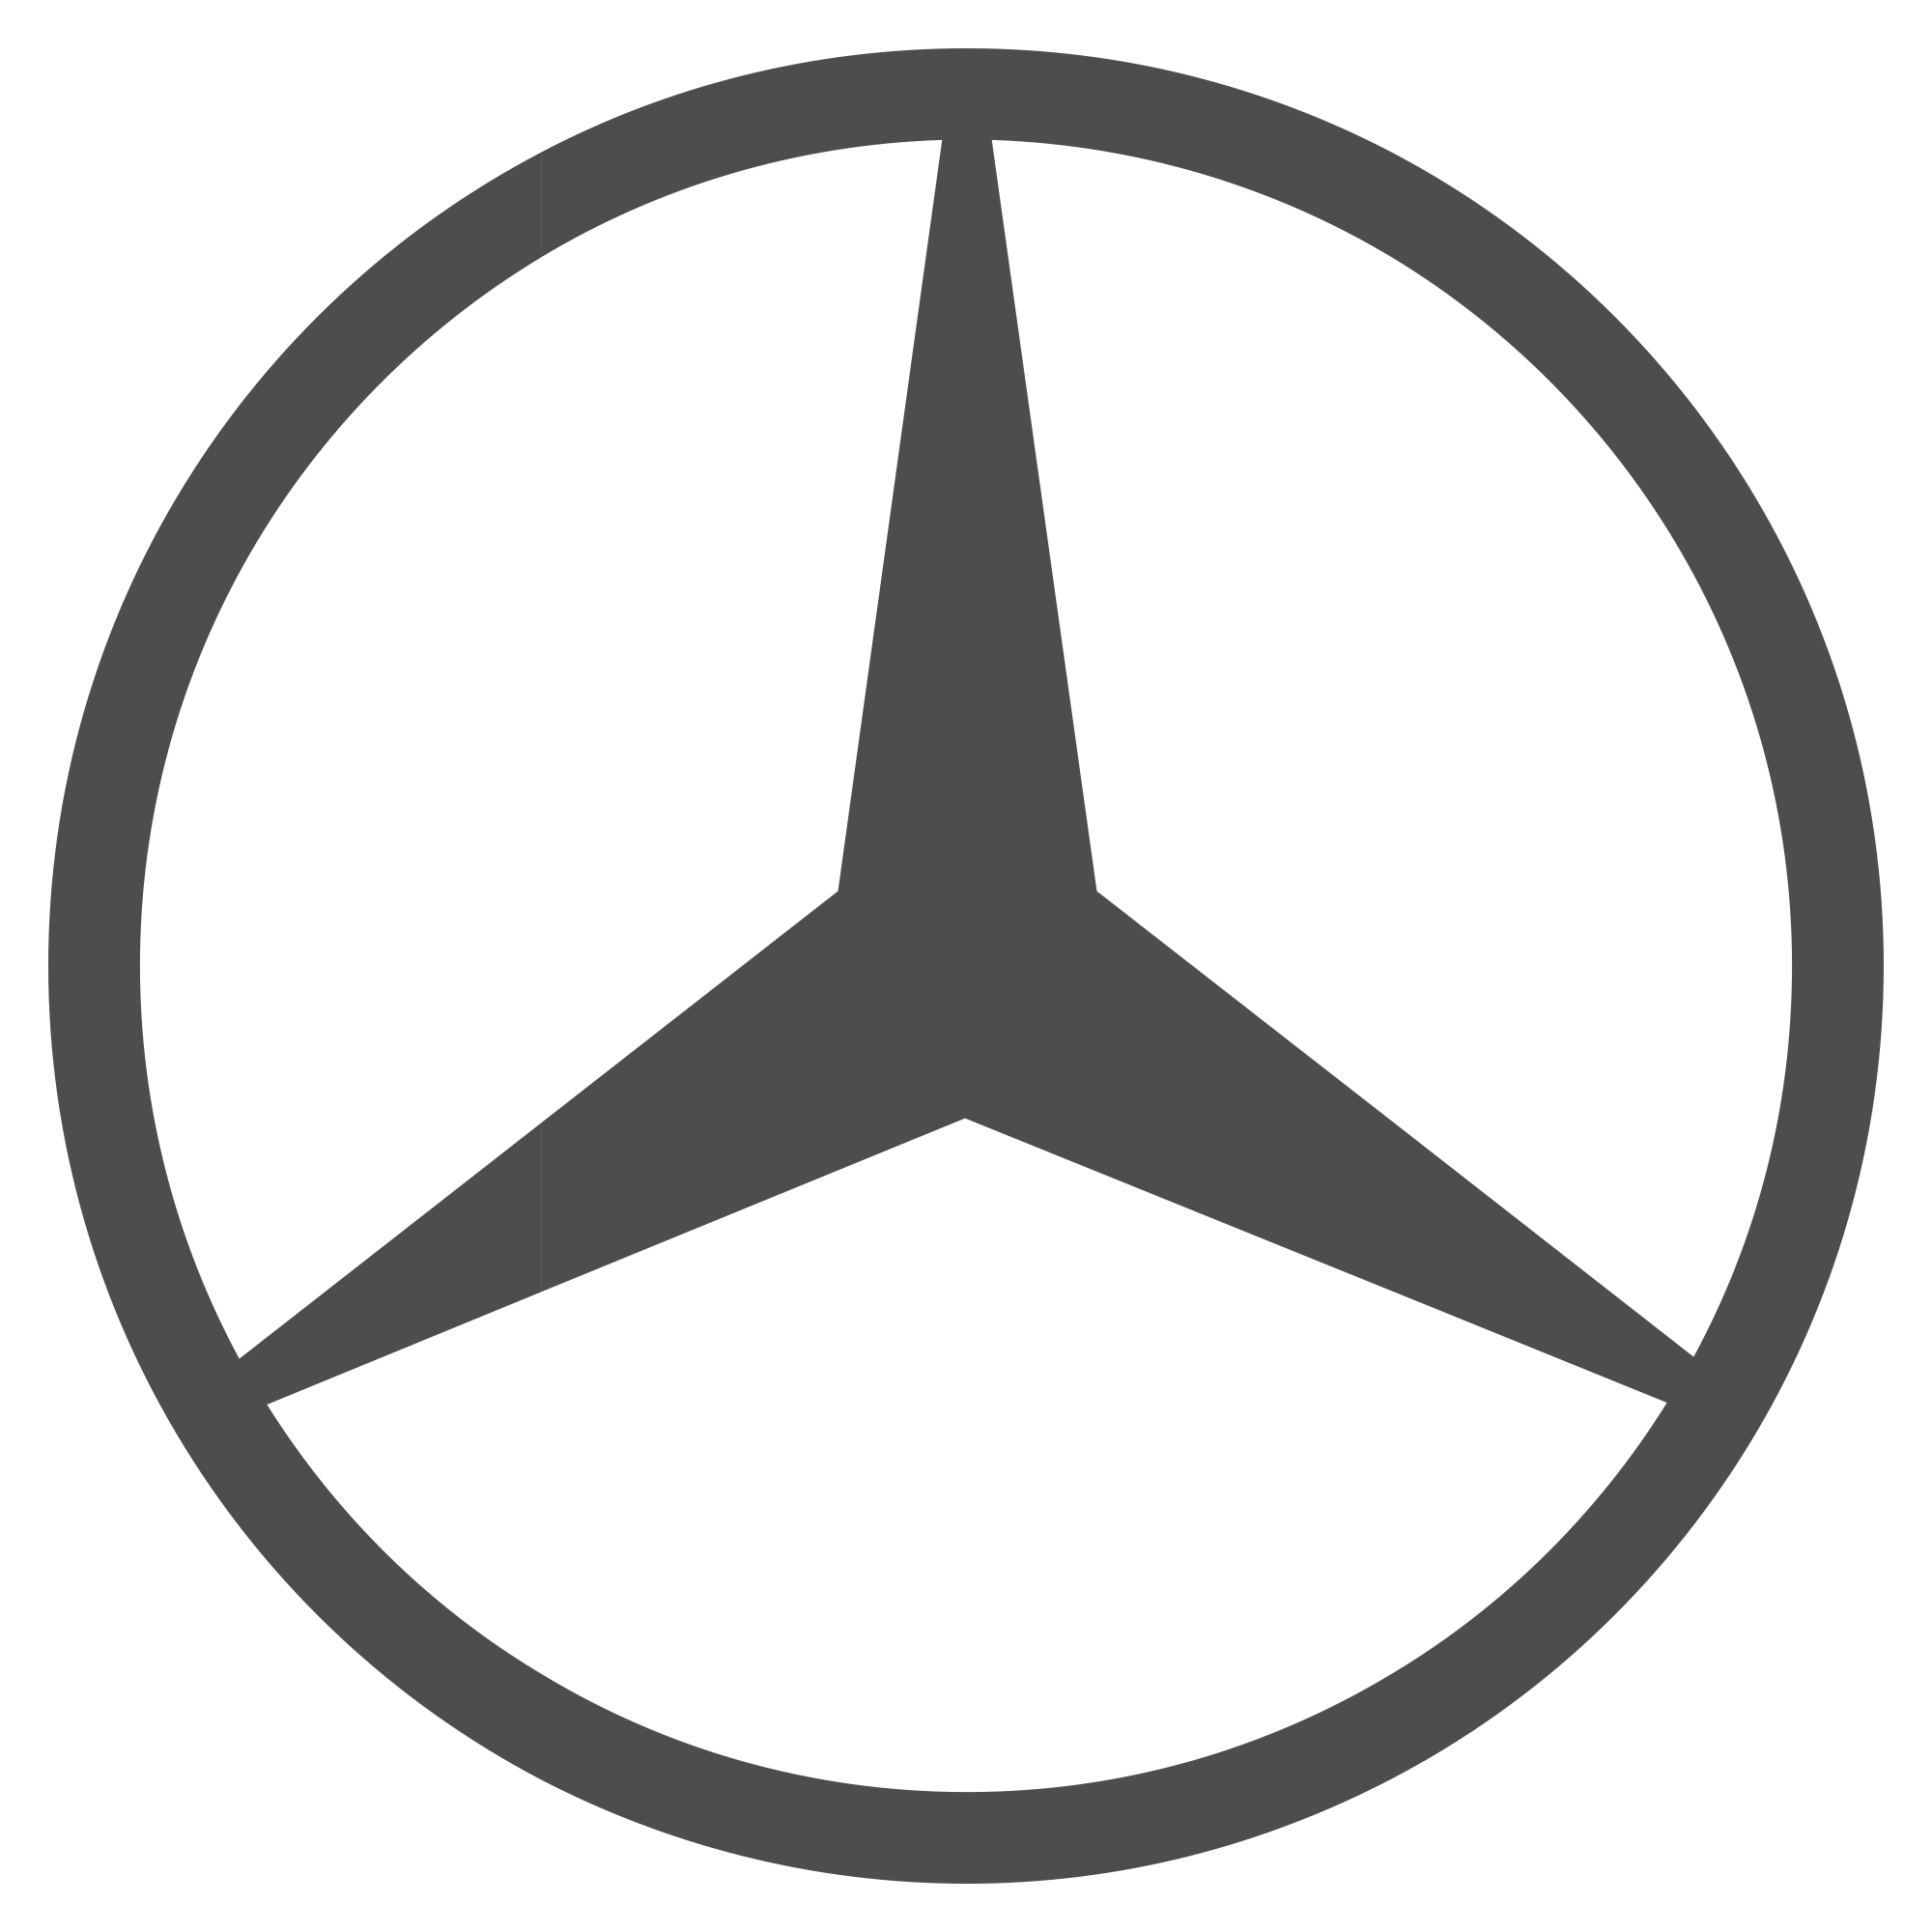 Benz Black Logo - File:Mercedes-Benz free logo.svg - Wikimedia Commons